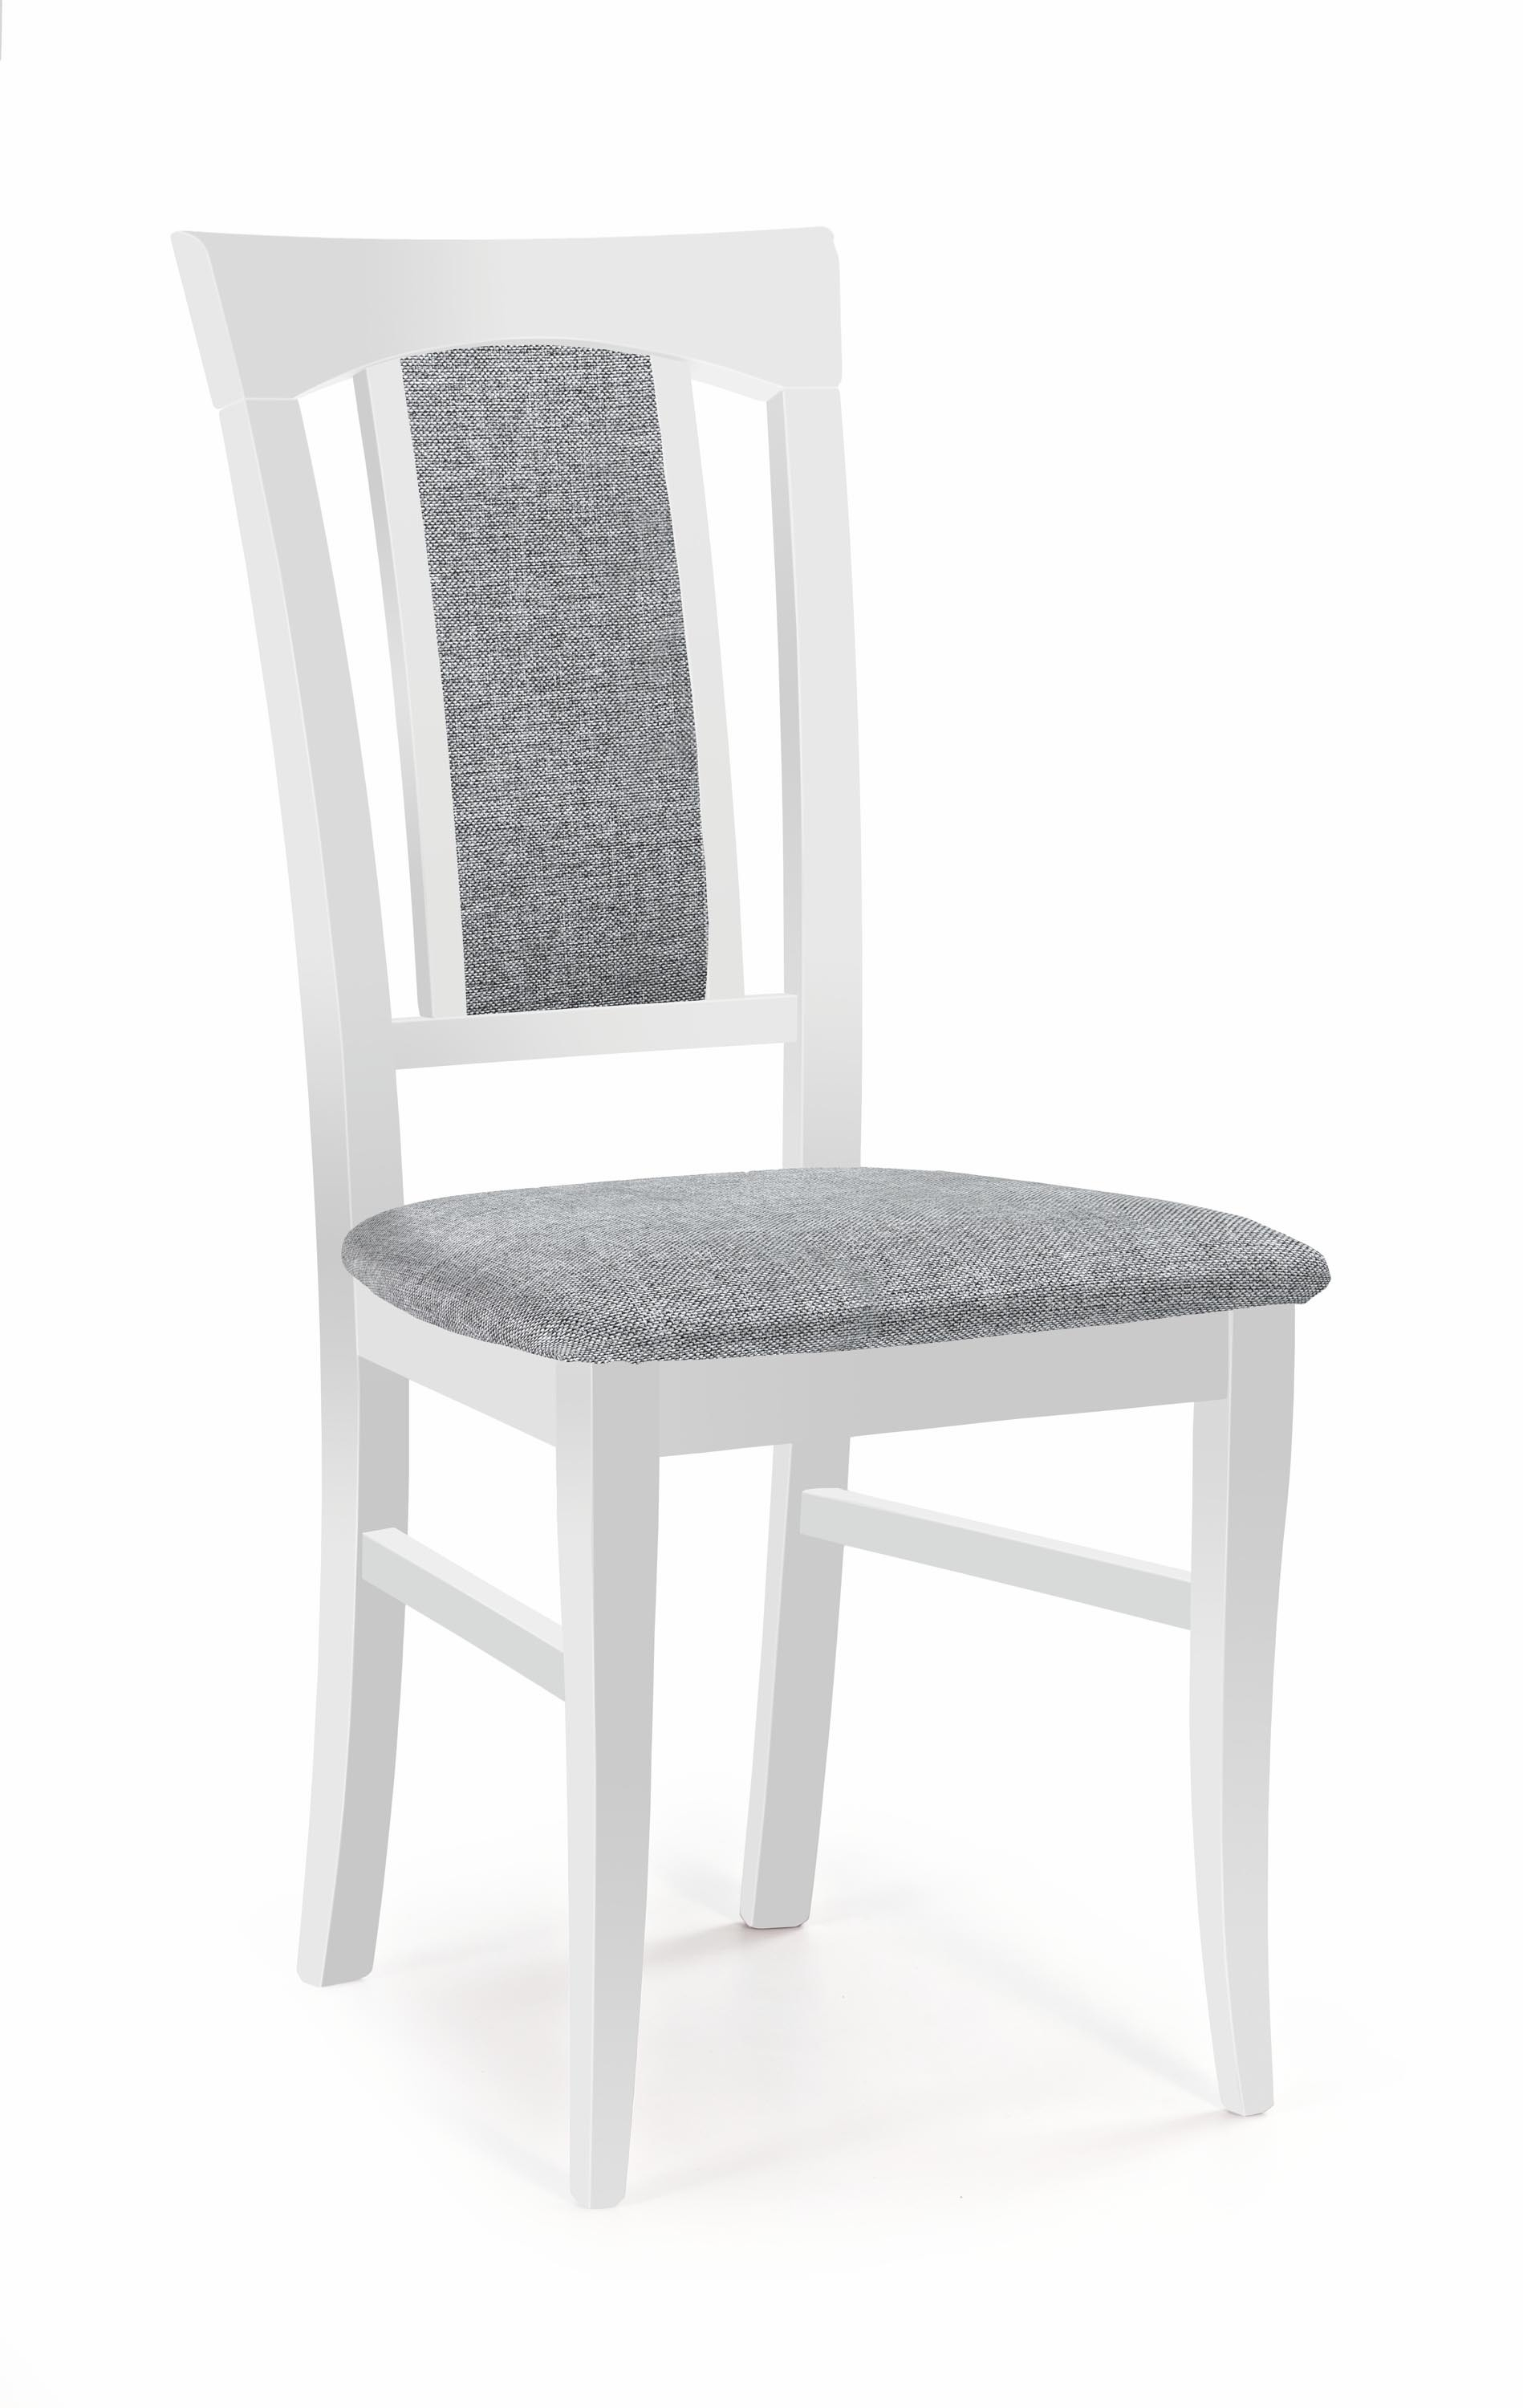 KONRAD krzesło biały / tap: Inari 91